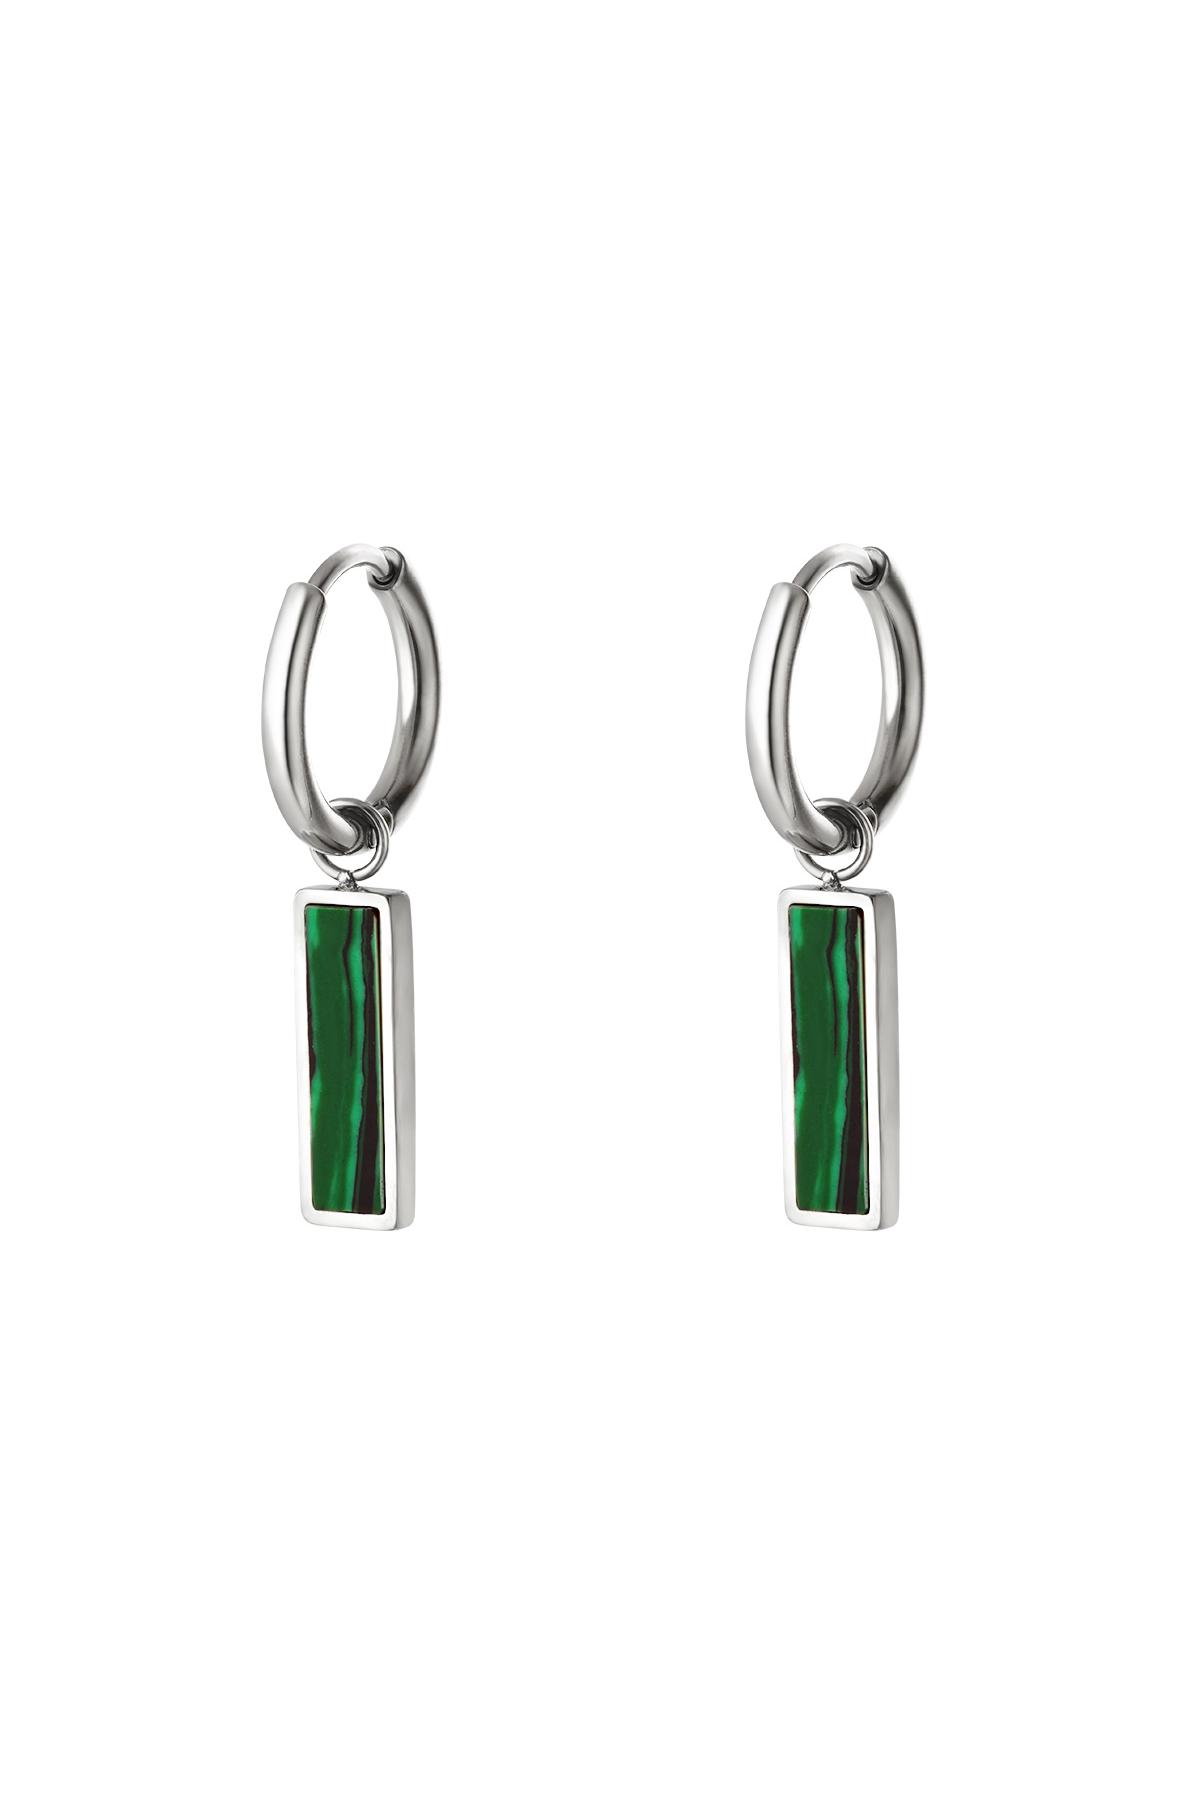 Green bar earrings  Silver Stainless Steel